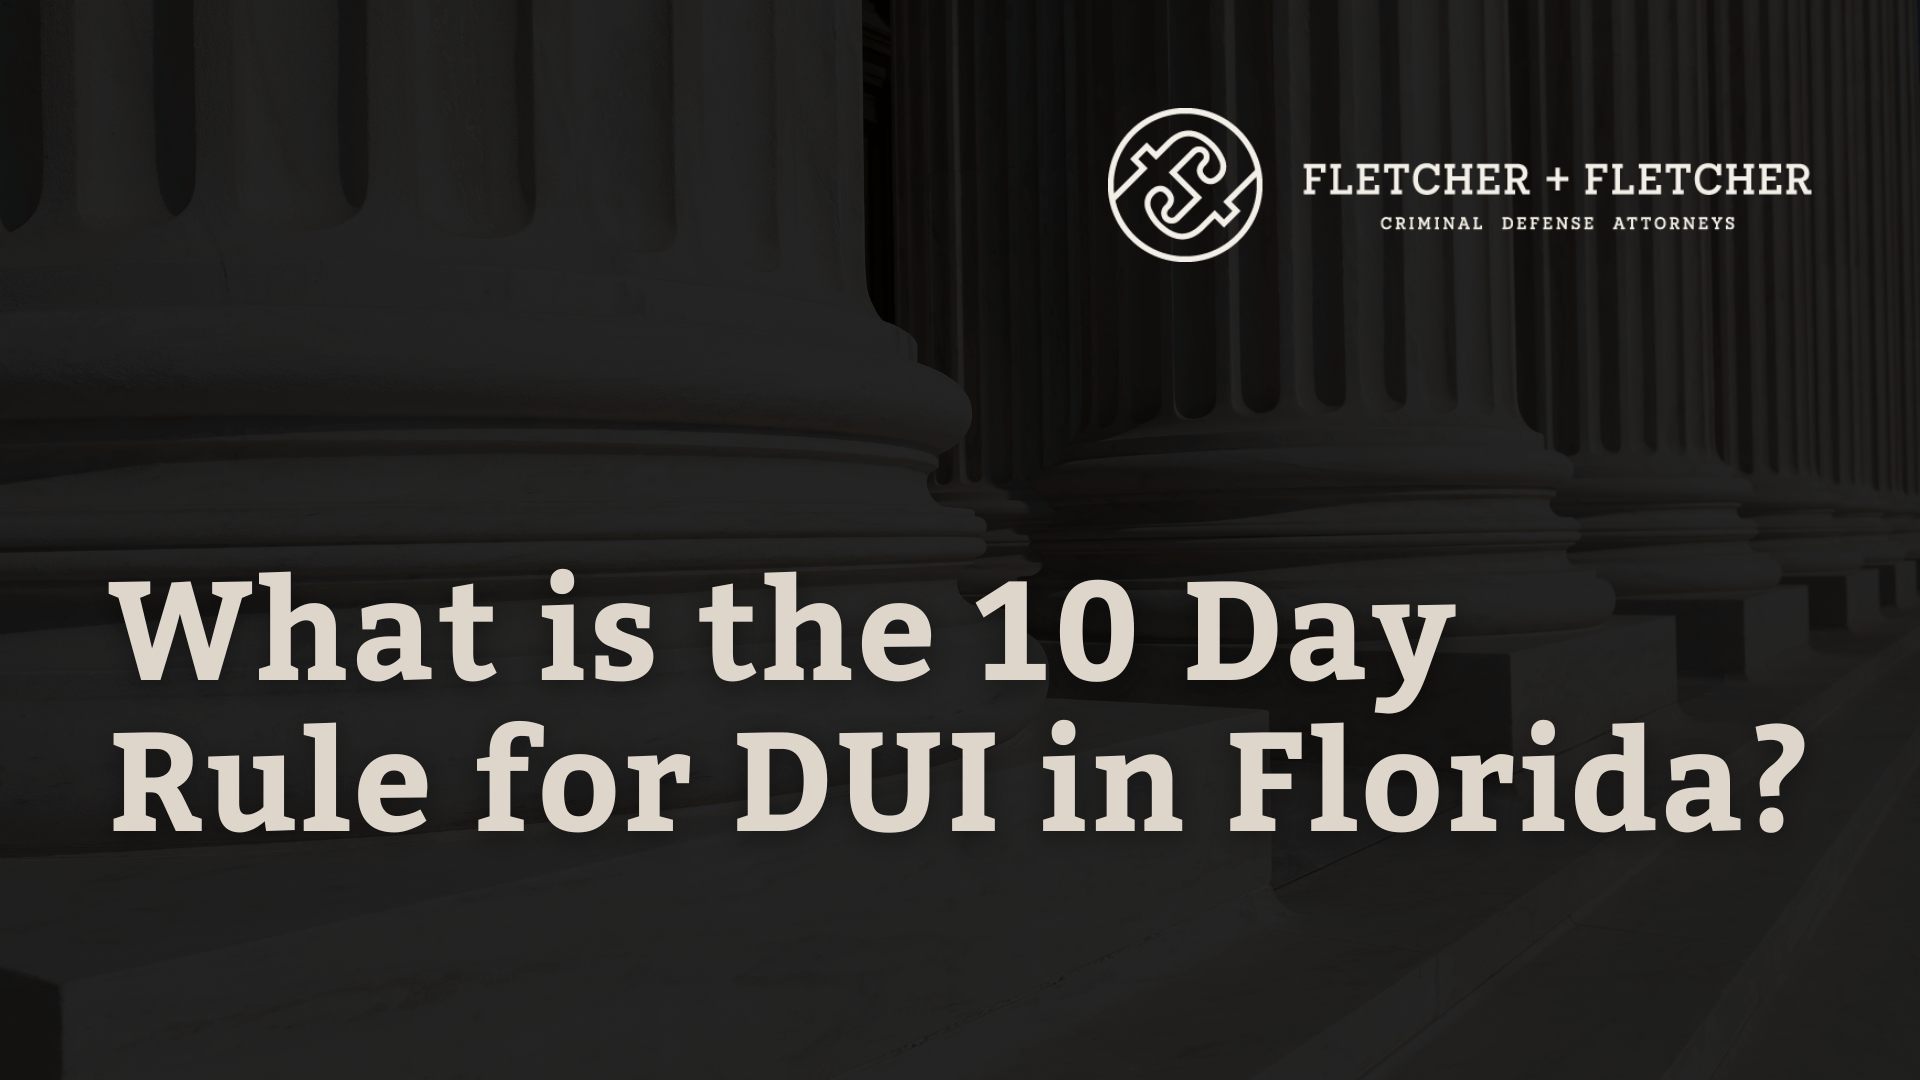 10 Day Rule for DUI in Florida - fletcher and fletcher - st pete florida criminal defense